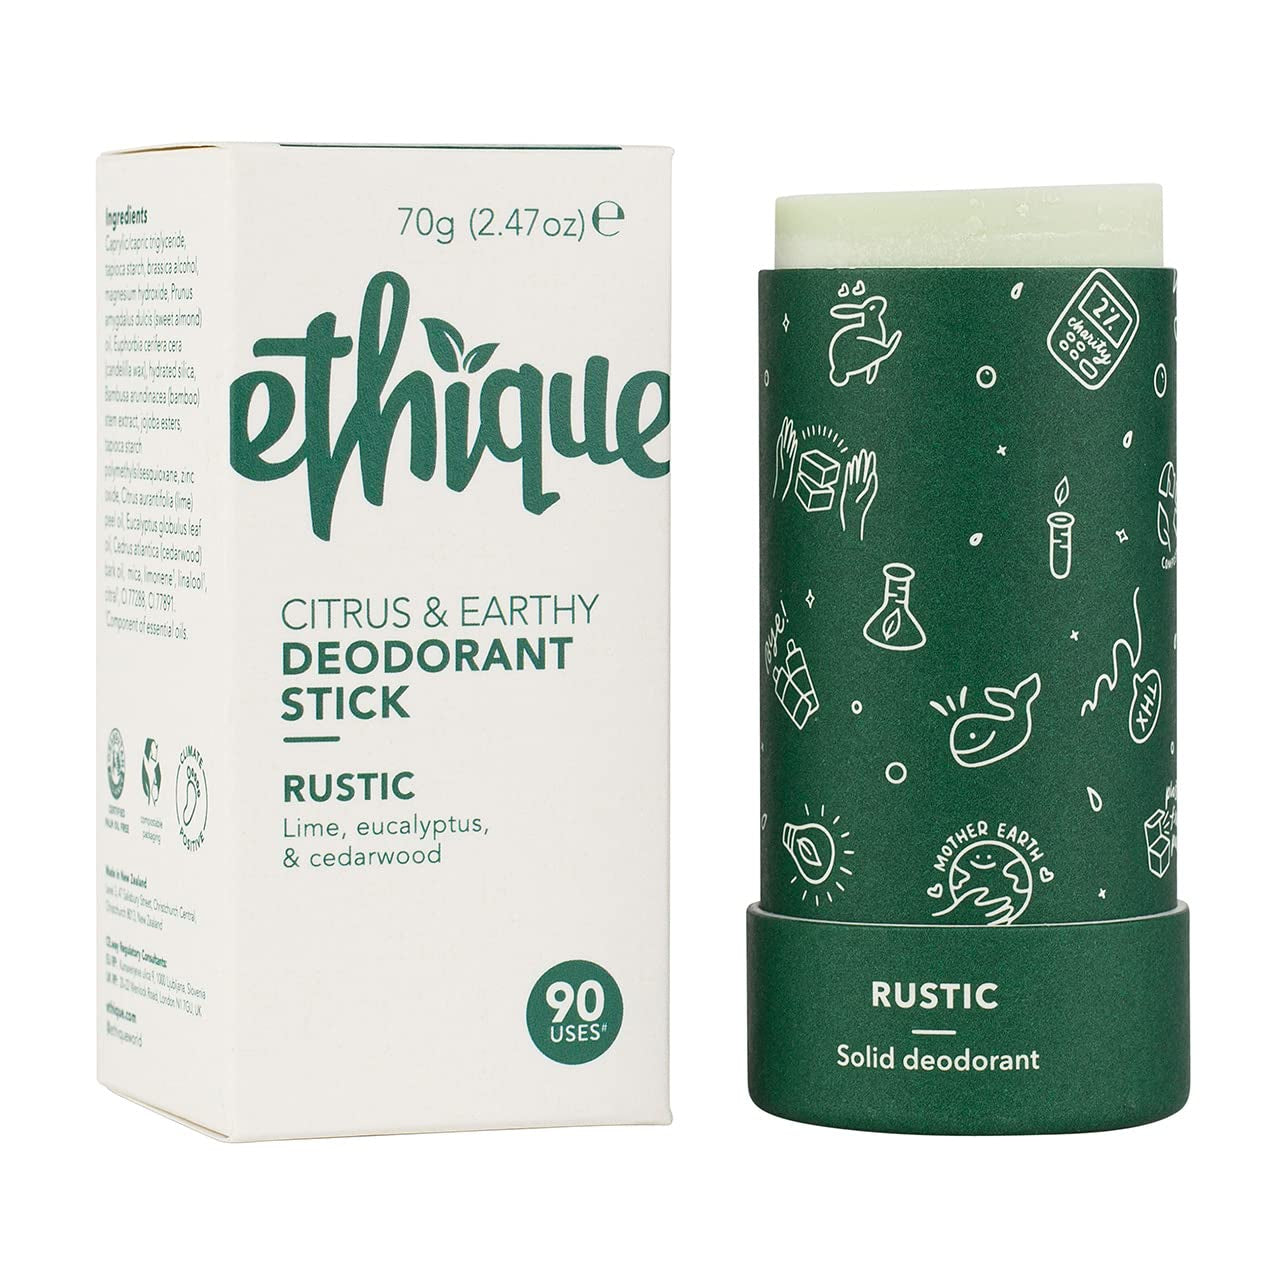 Rustic Citrus & Earthy Deodorant - Natural Aluminum-Free Stick for Women & Men - Vegan, Eco-Friendly- Zero-Waste, Plastic-Free, Cruelty-Free, 2.47 Oz (Pack of 1)